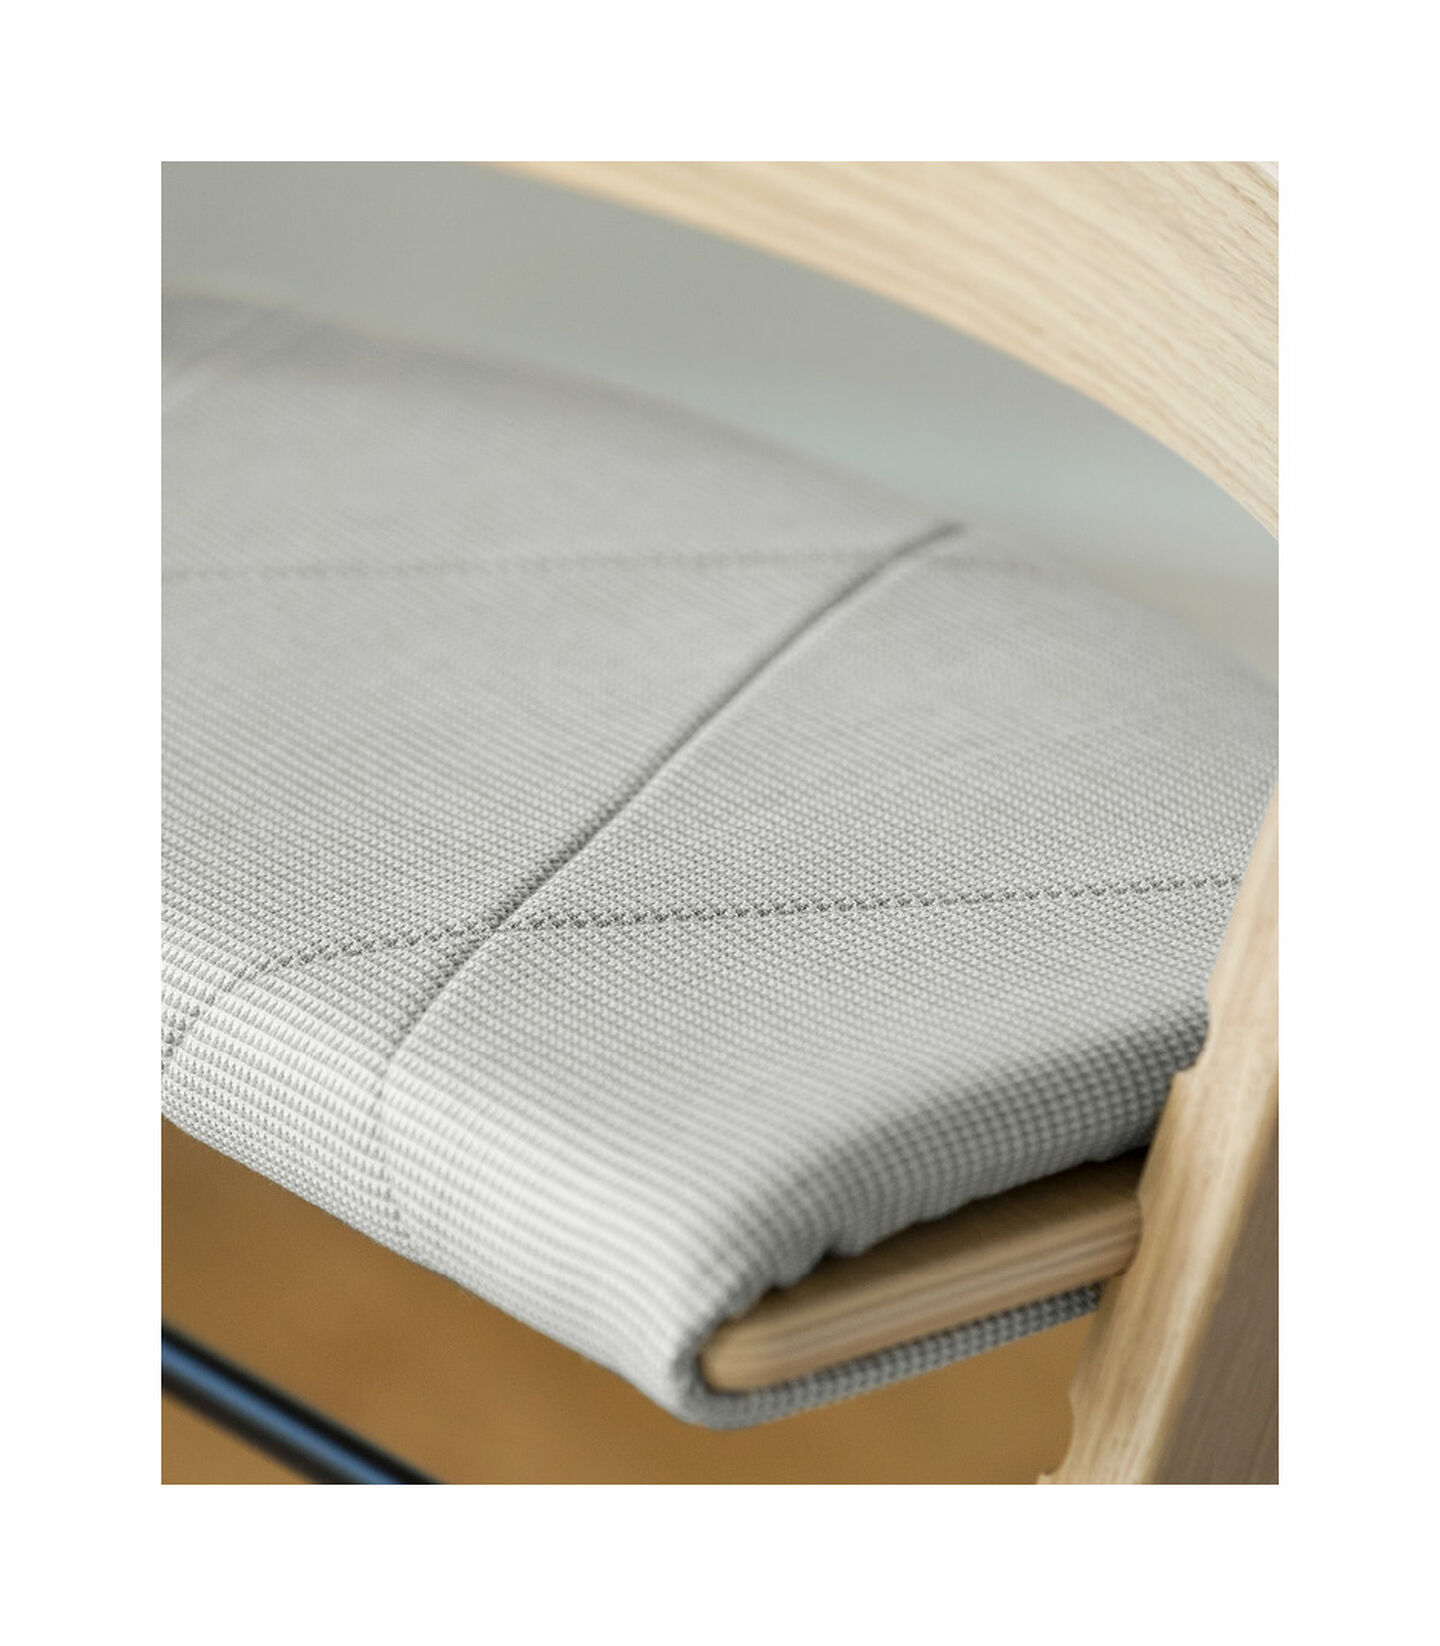 Tripp Trapp® Junior Cushion Nordic Grey on Oak Natural Chair. view 4